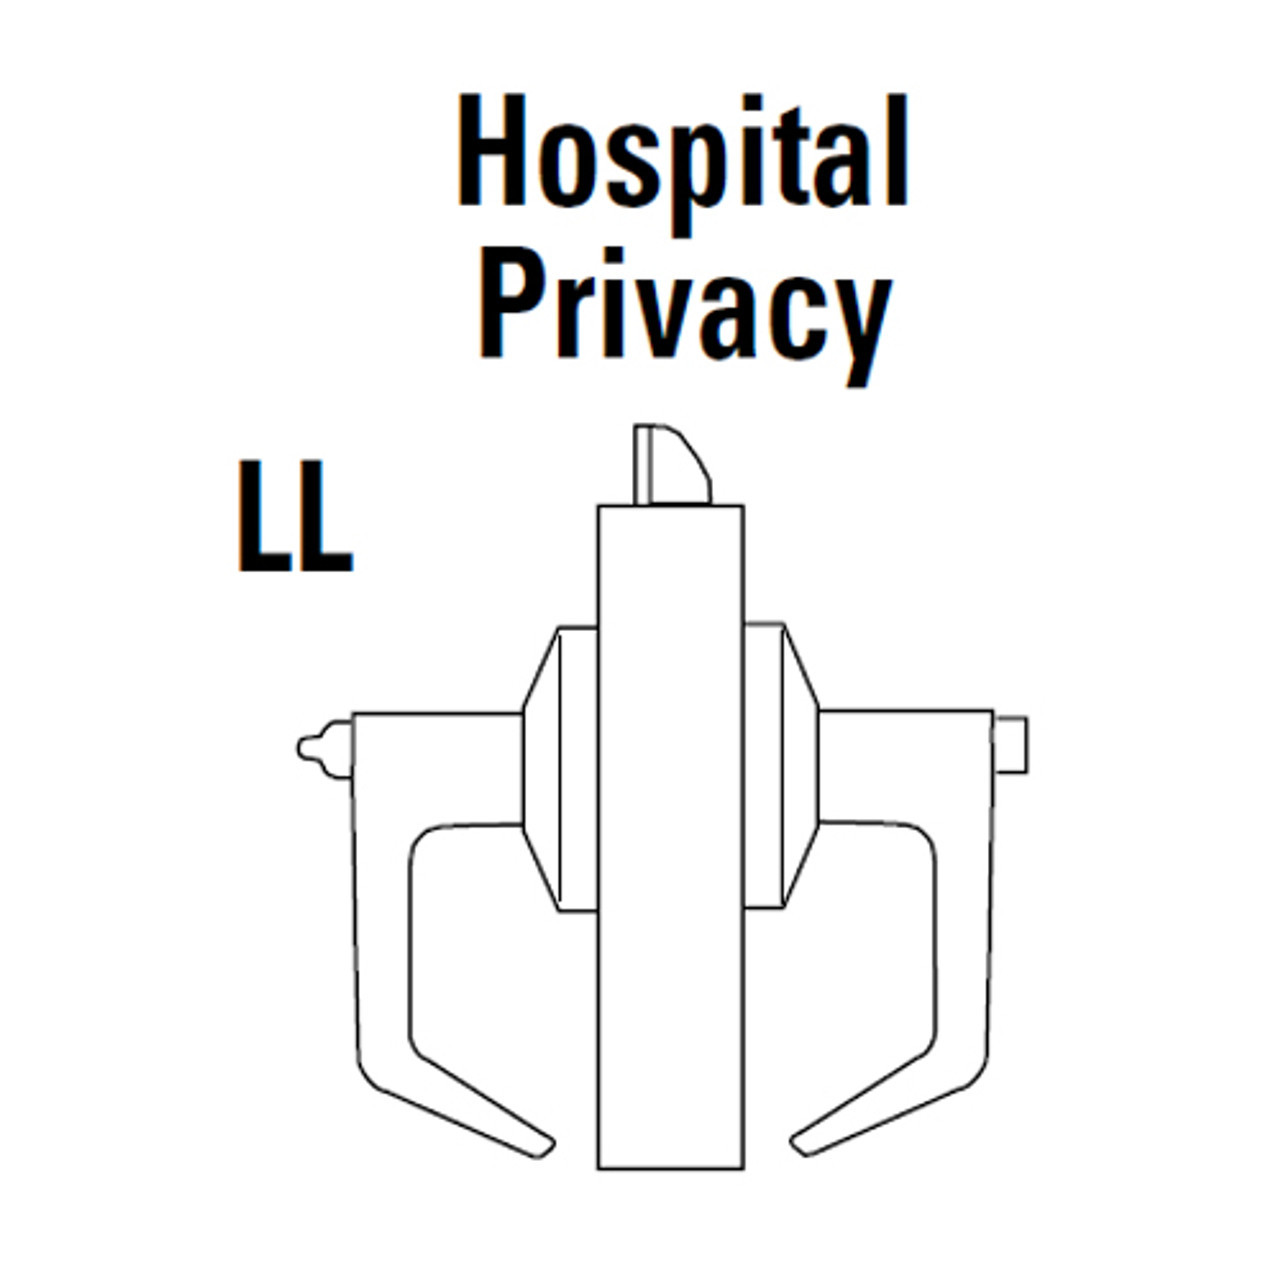 9K30LL14LSTK622LM Best 9K Series Hospital Privacy Heavy Duty Cylindrical Lever Locks in Black